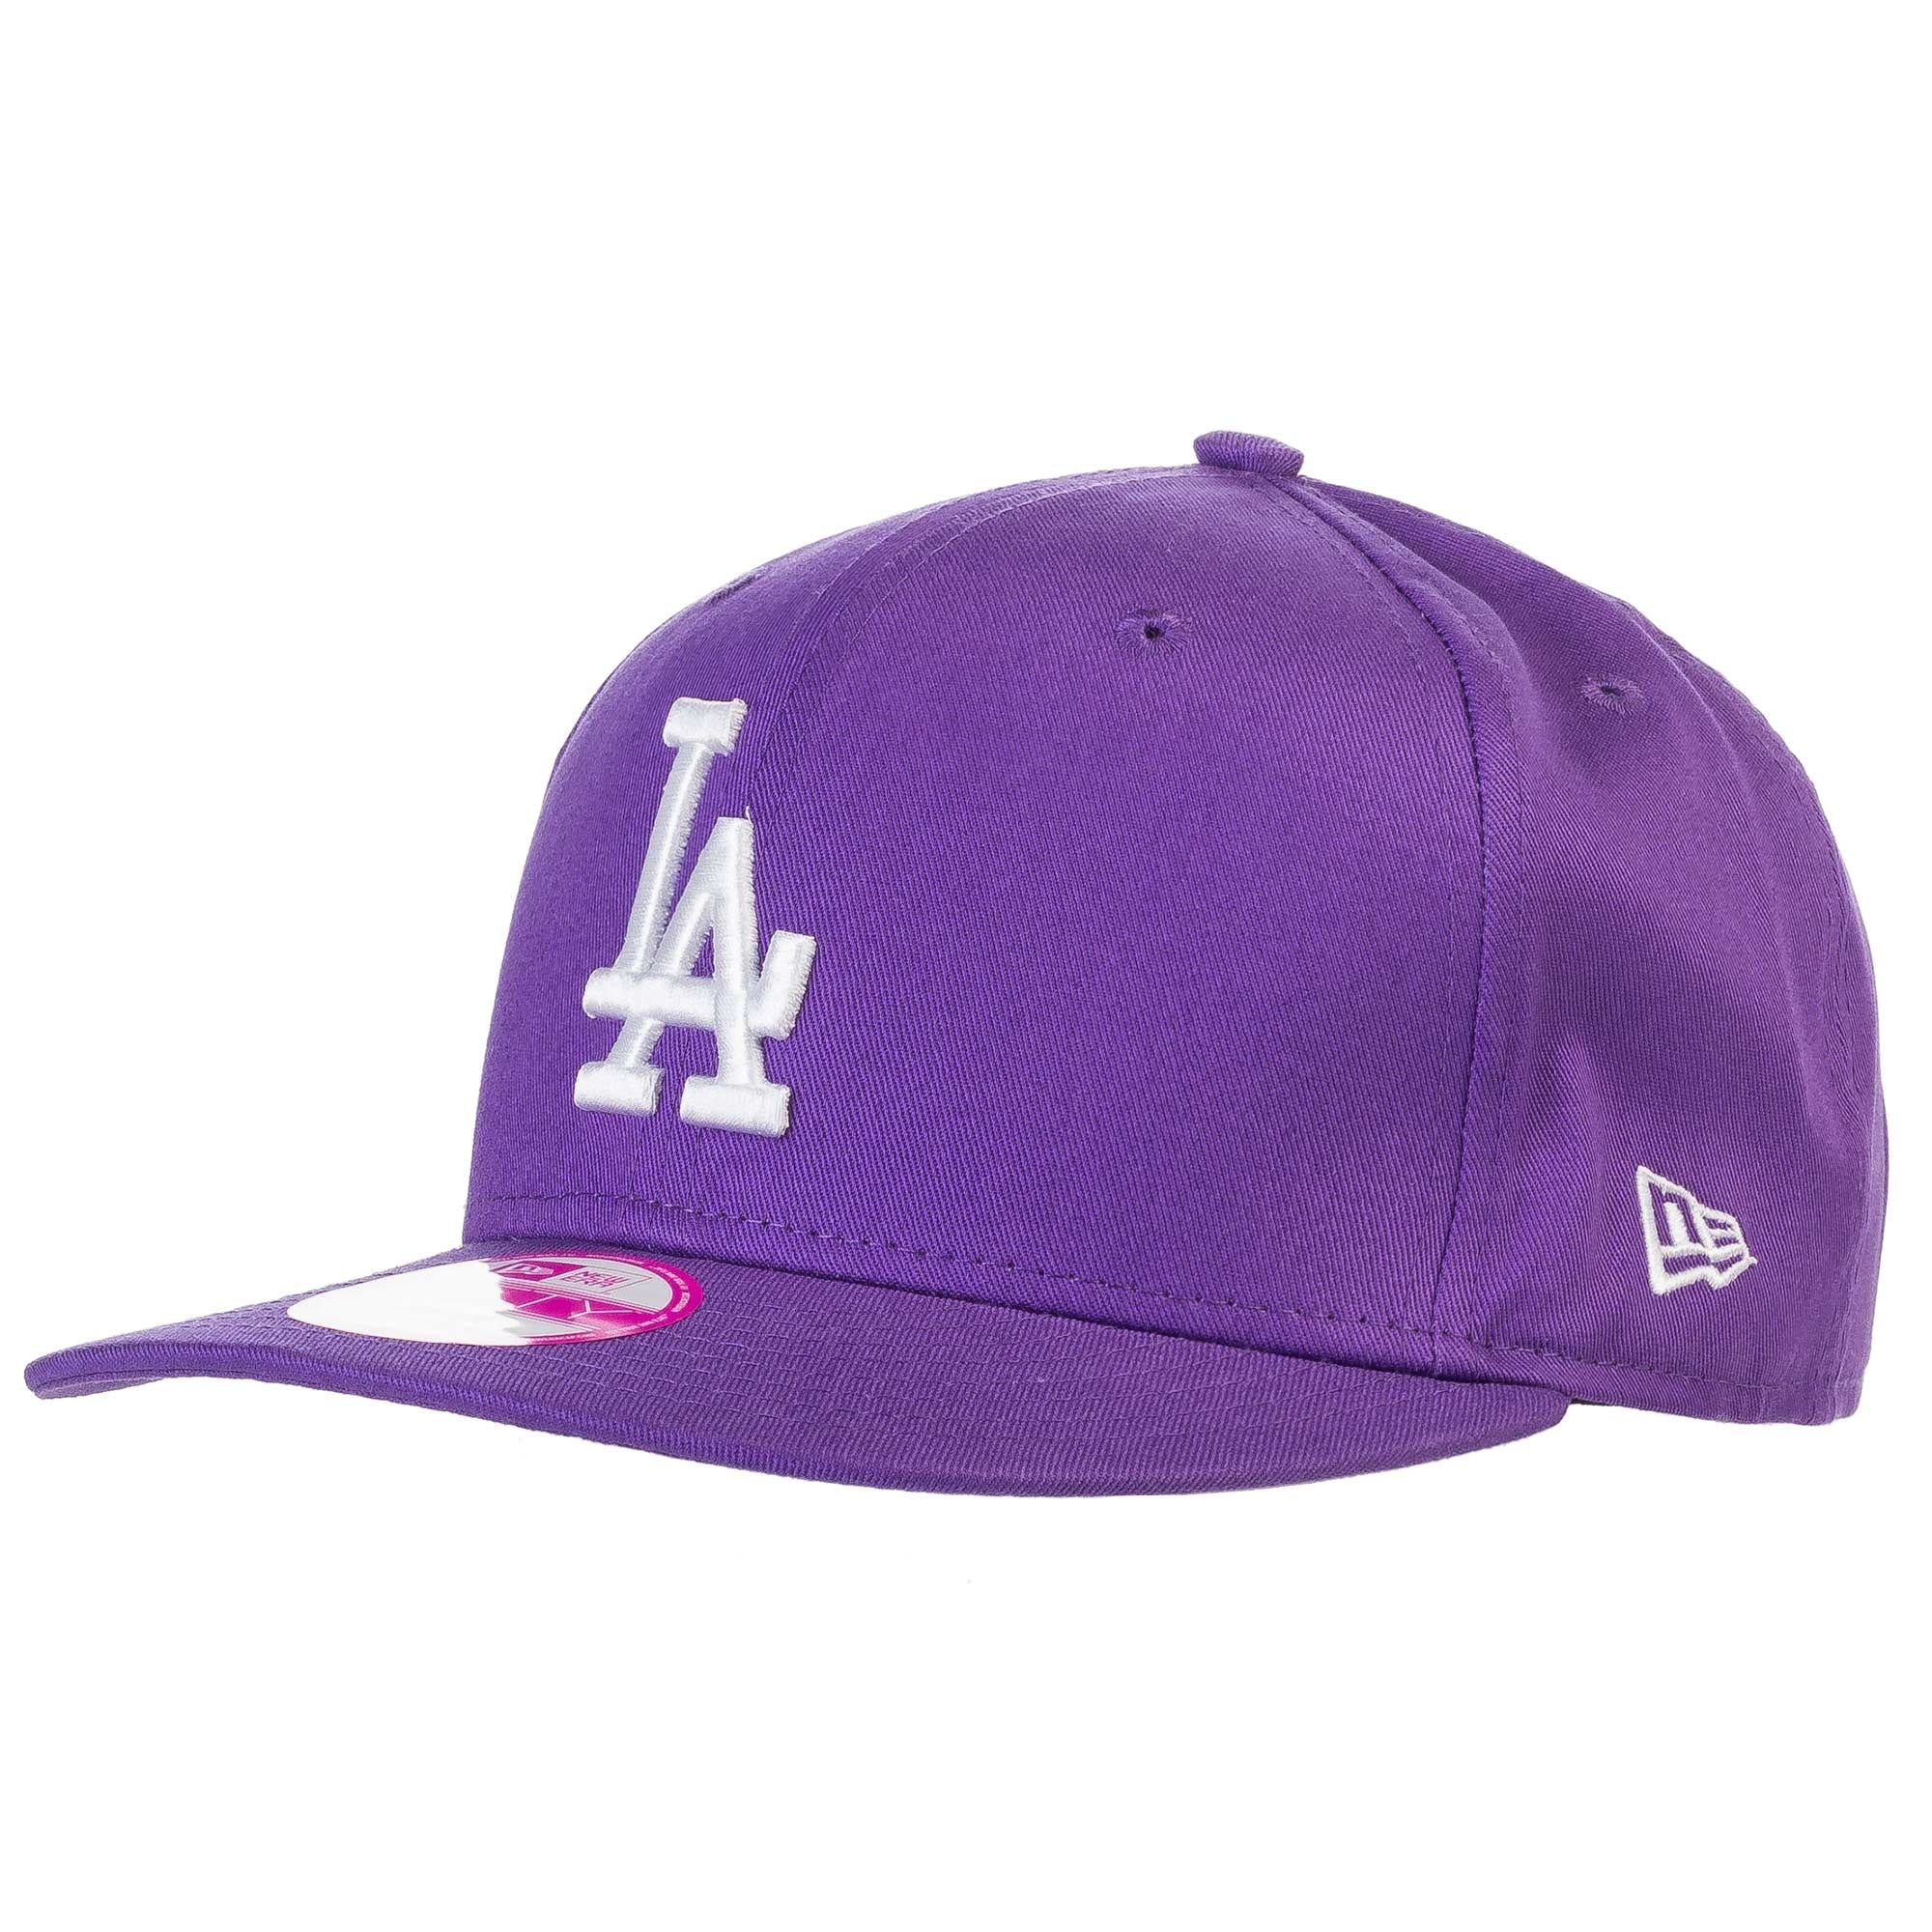 Cap New Era Los Angeles Dodgers 9Fifty Fash. purple